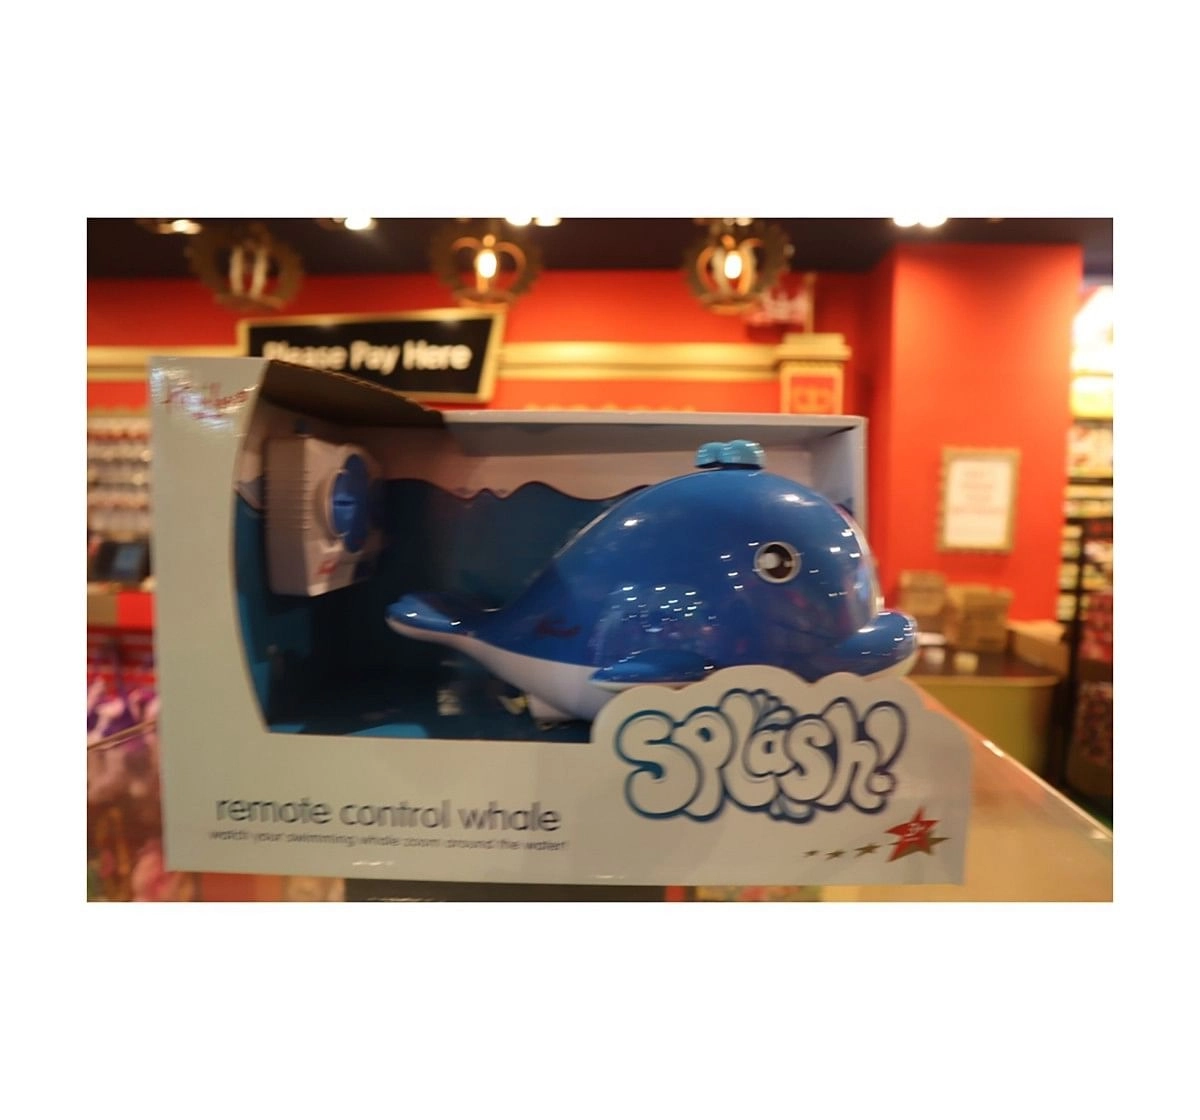 Hamleys Remote Control Whale Splash Bath Toys & Accessories for Kids age 3Y+ (Blue)